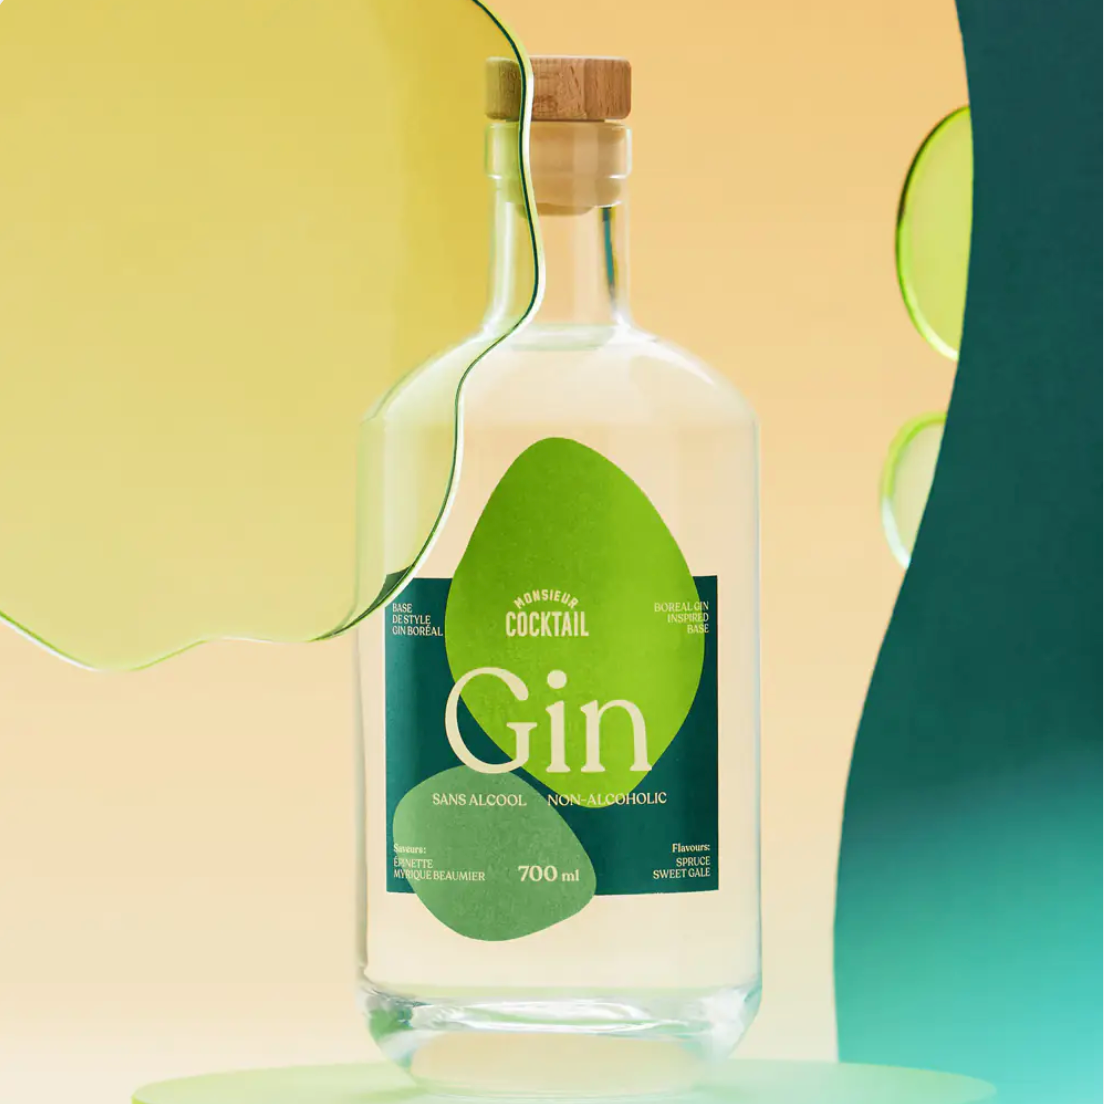 GIN BORÉAL - Monsieur Cocktail (SANS ALCOOL) – Ginius - Gin Artisanal